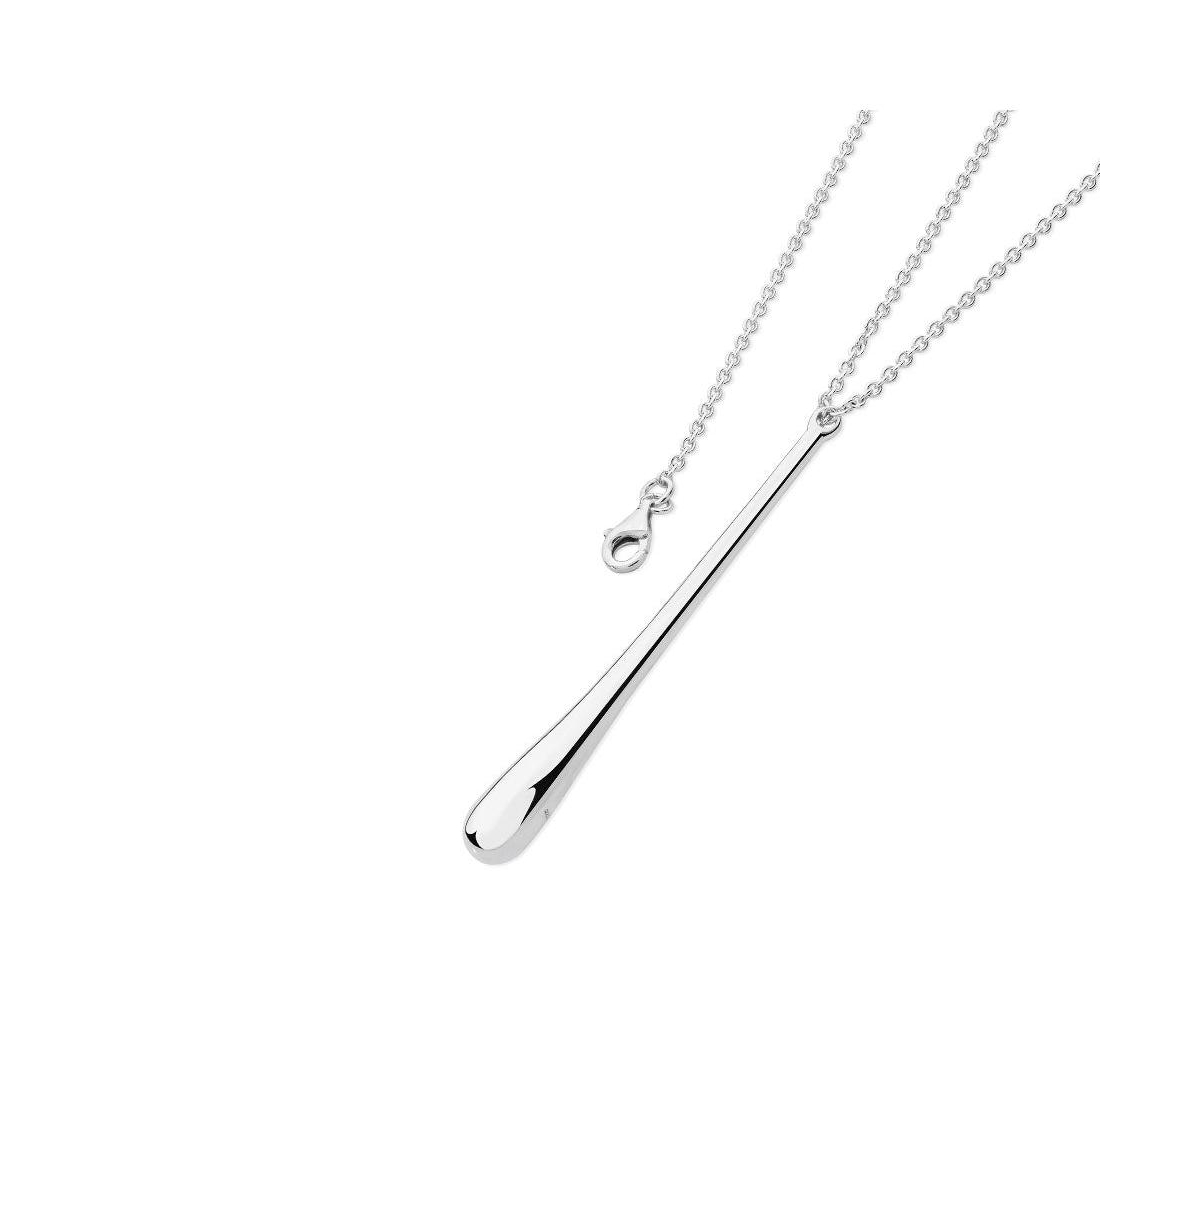 32" long drop Necklace - Silver